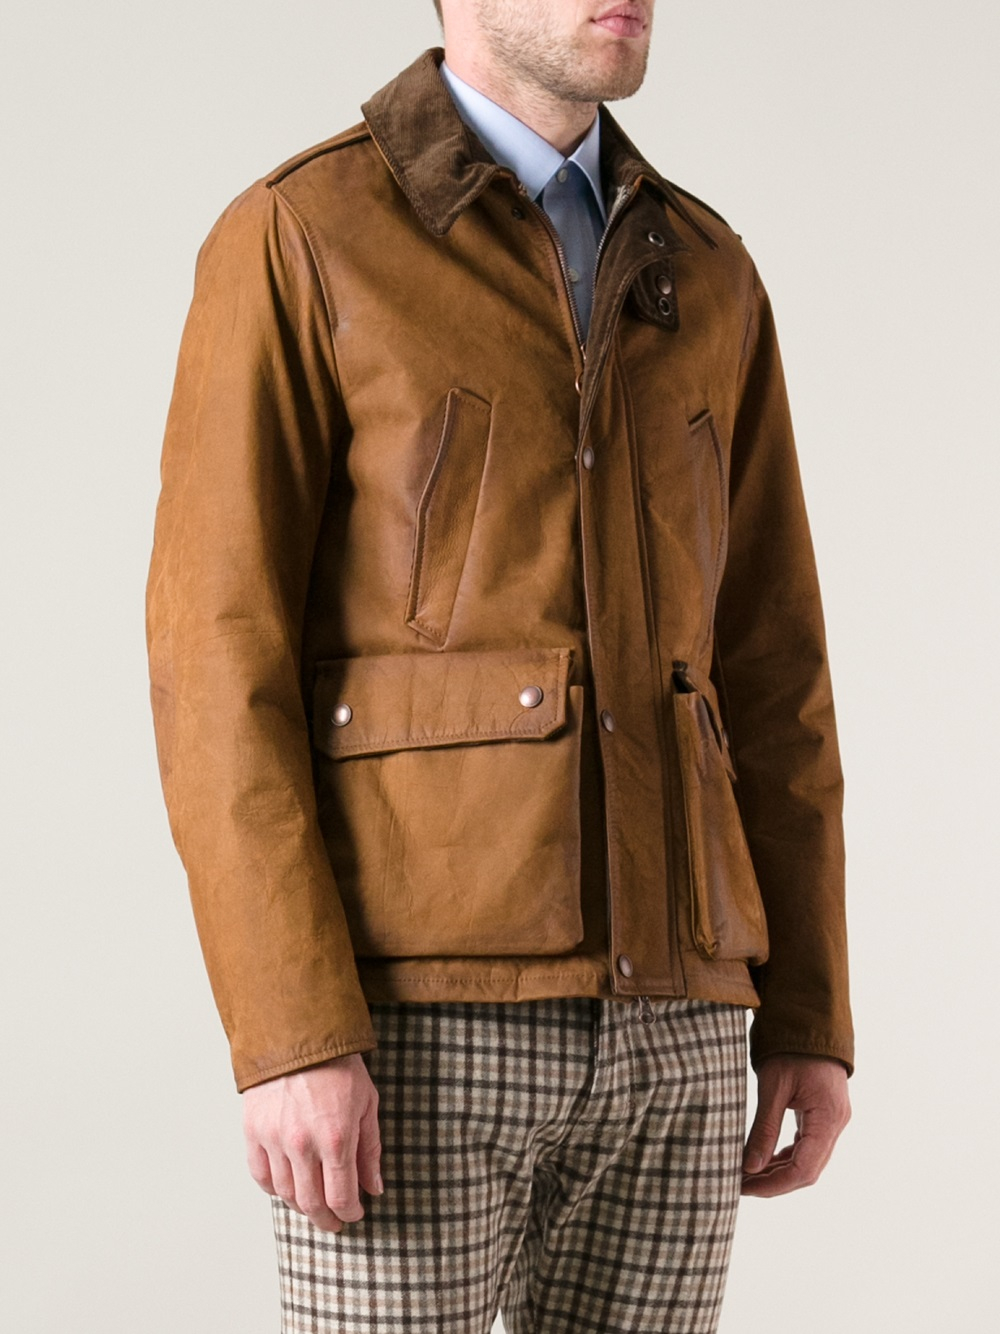 Jacob Cohen Contrast Collar Jacket in Brown for Men - Lyst